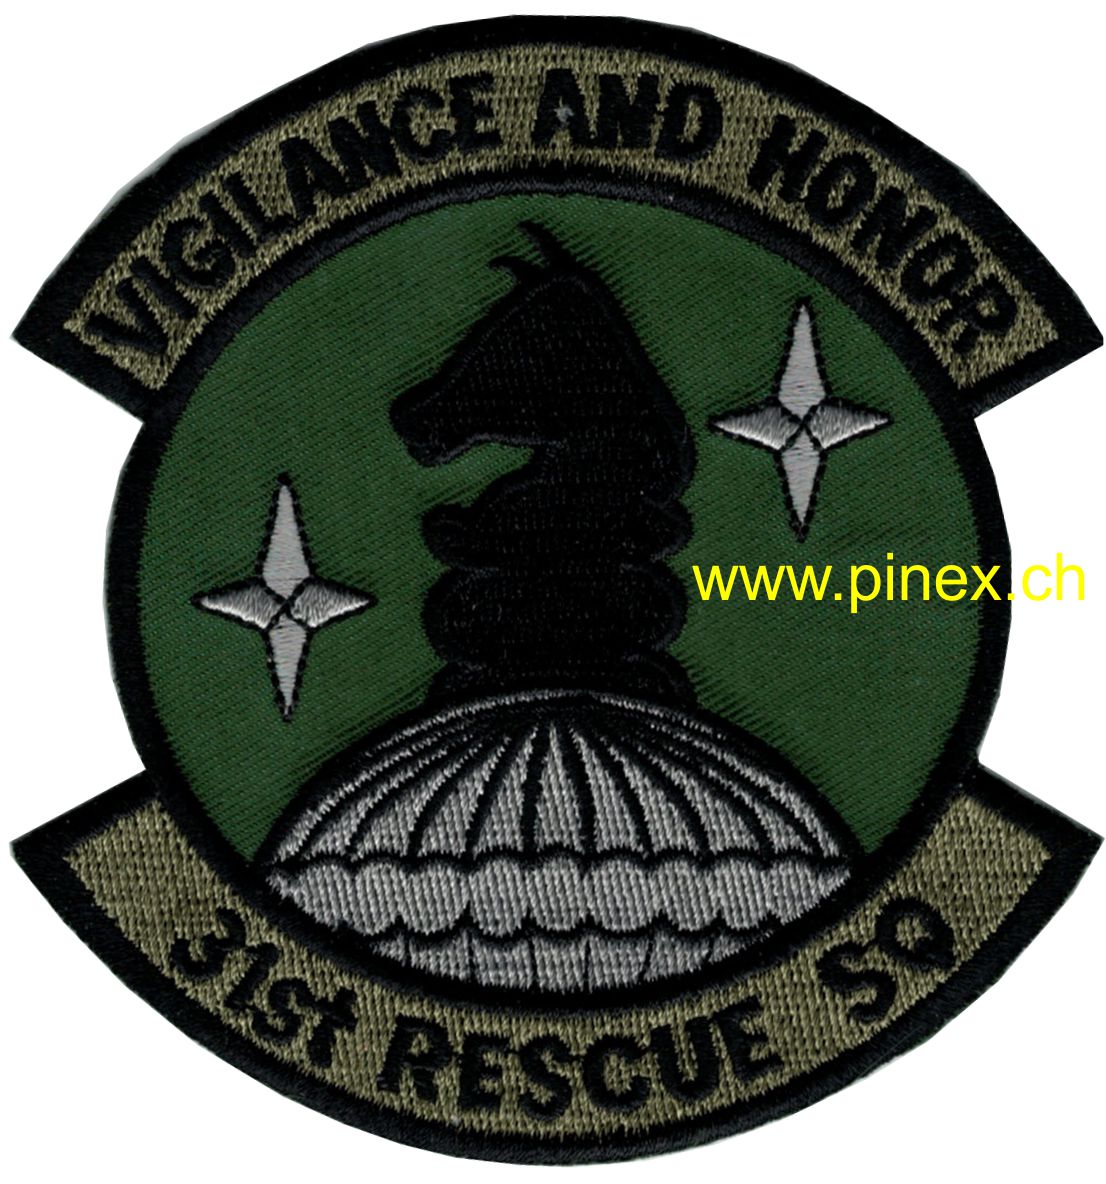 Bild von 31st Rescue Squadron USAF Patch "Vigilance and Honor"